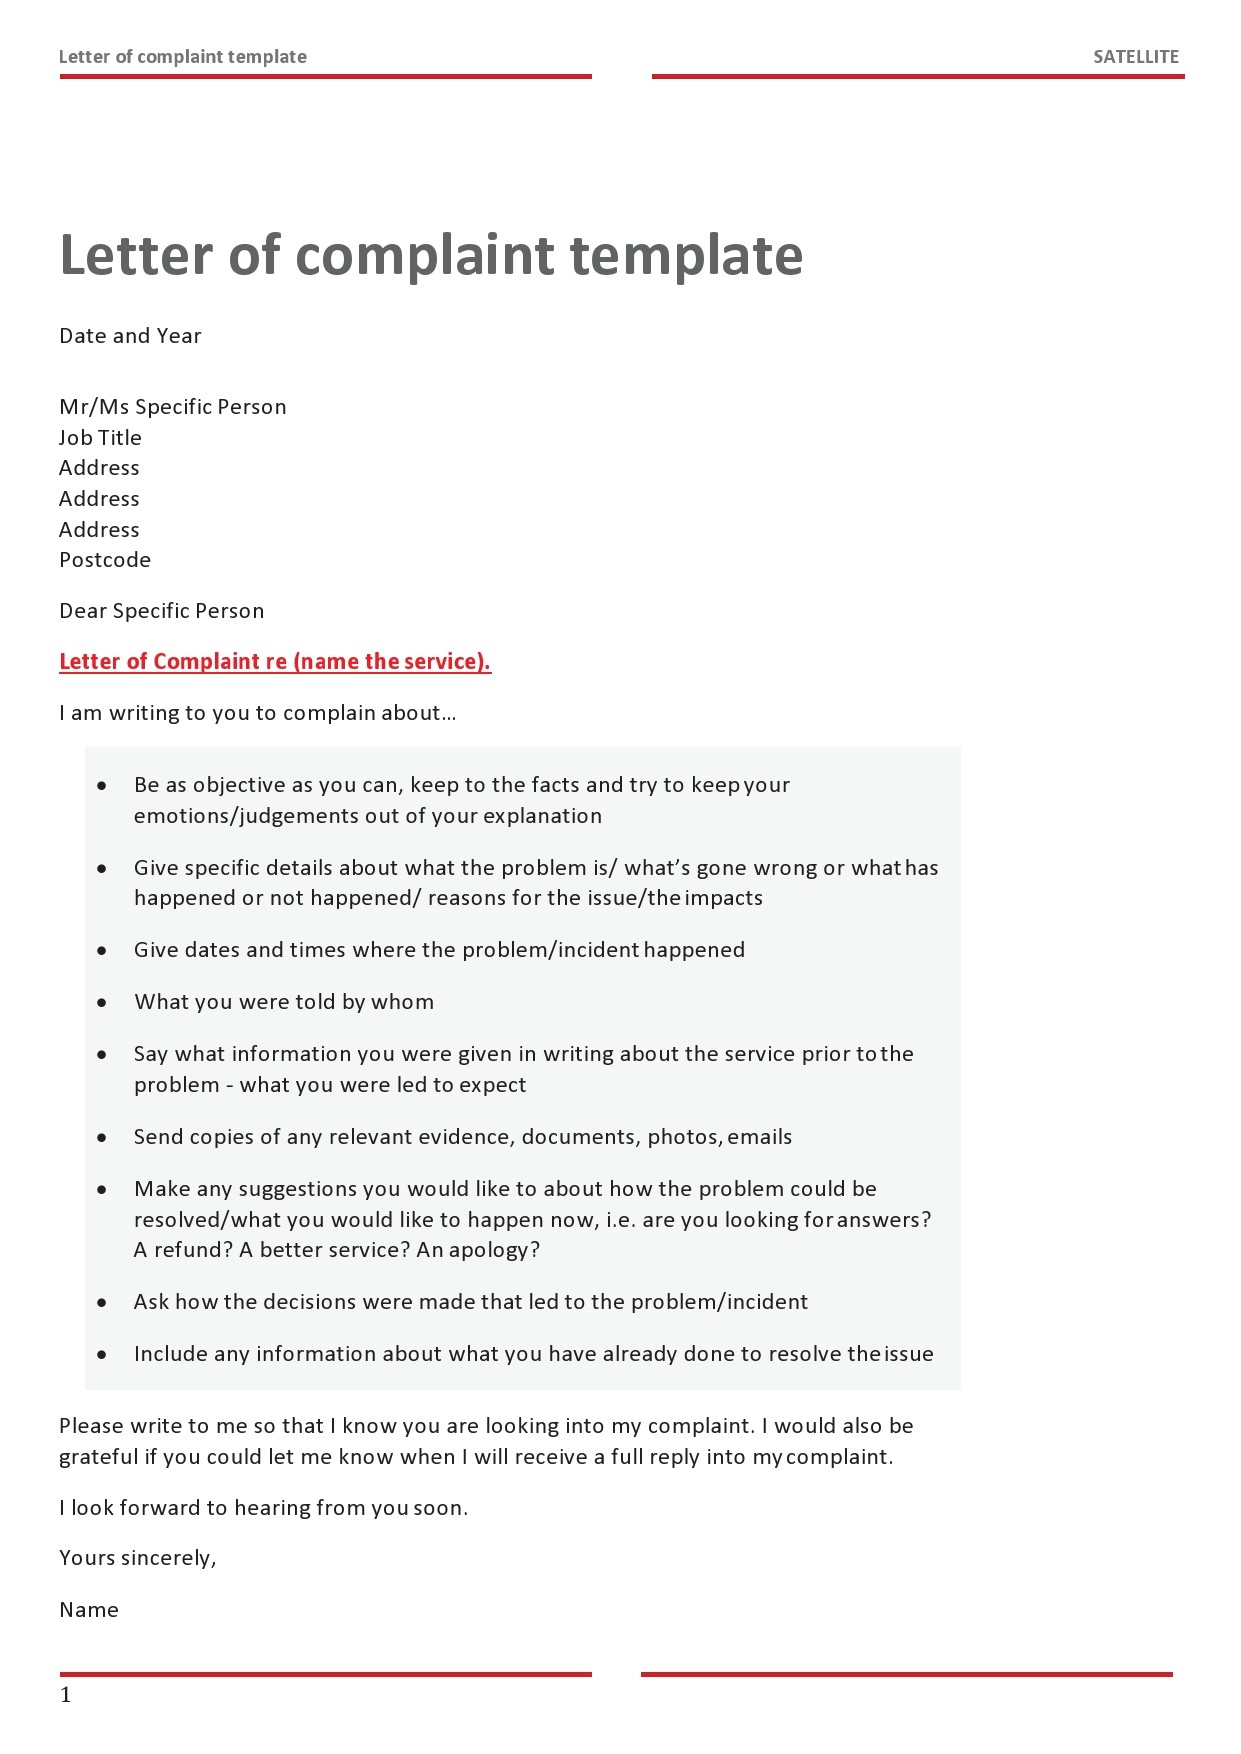 Free complaint letter template 13